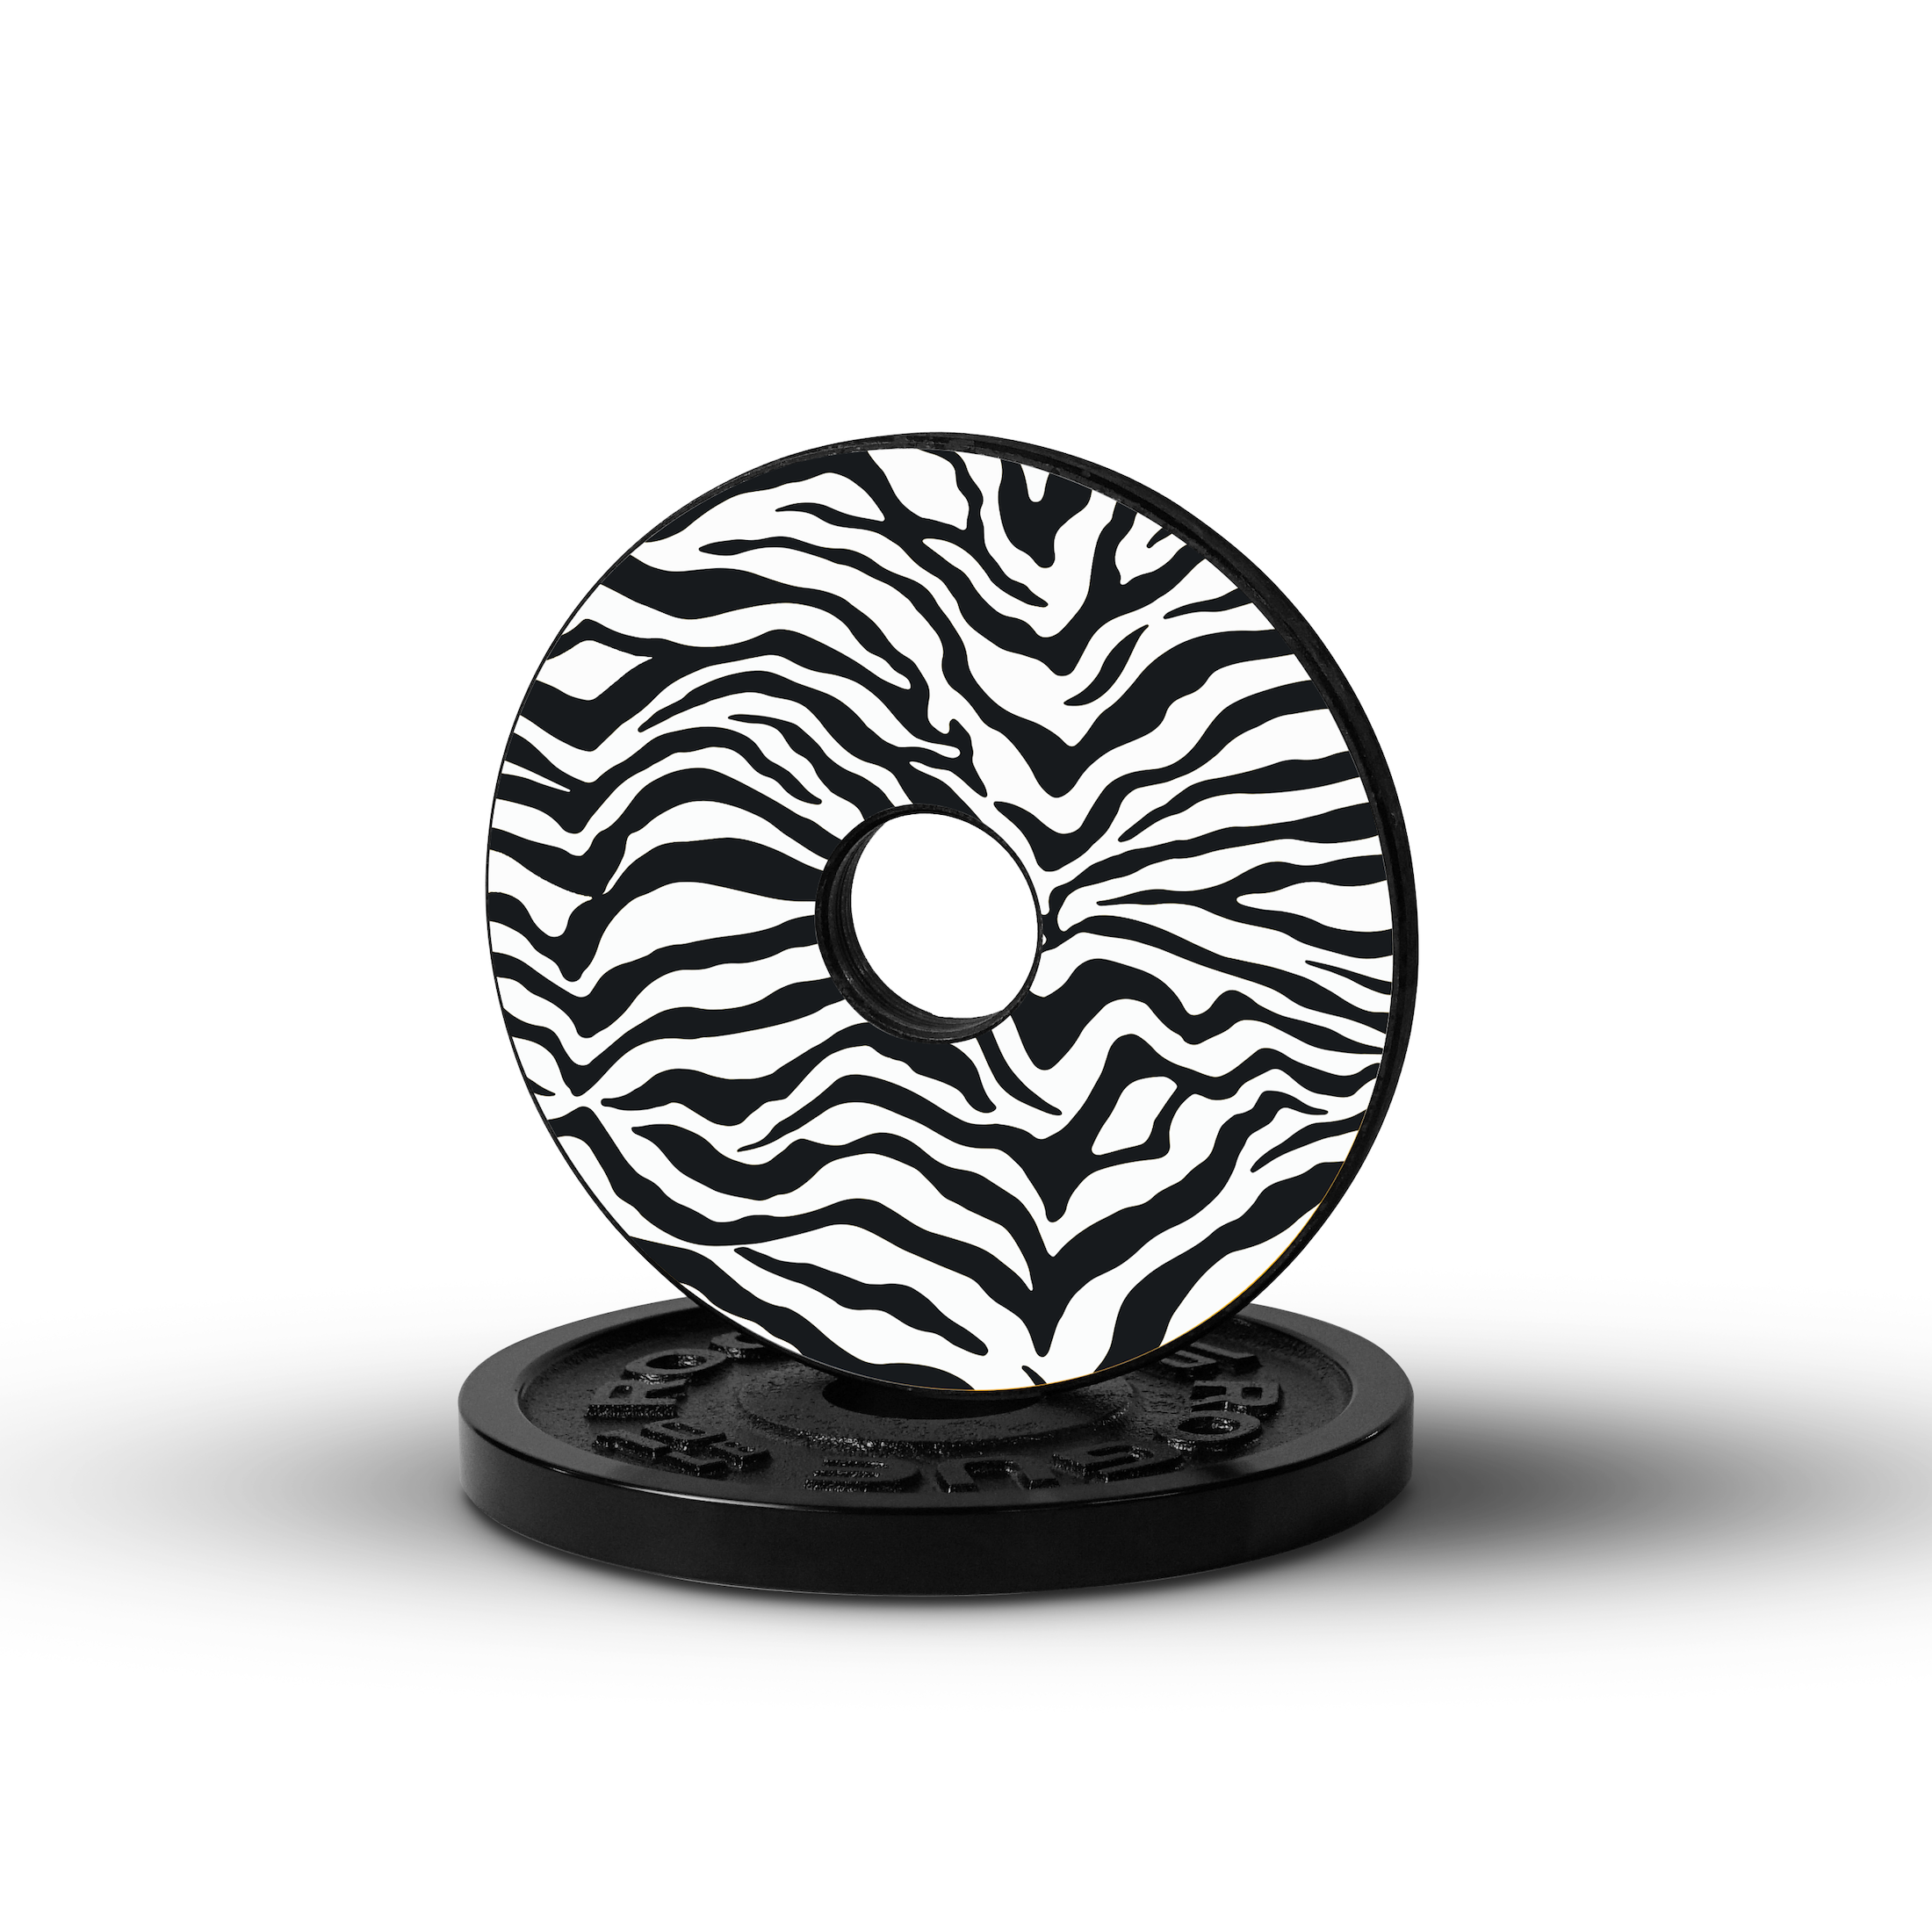 Zebra Print - For Iron Plates